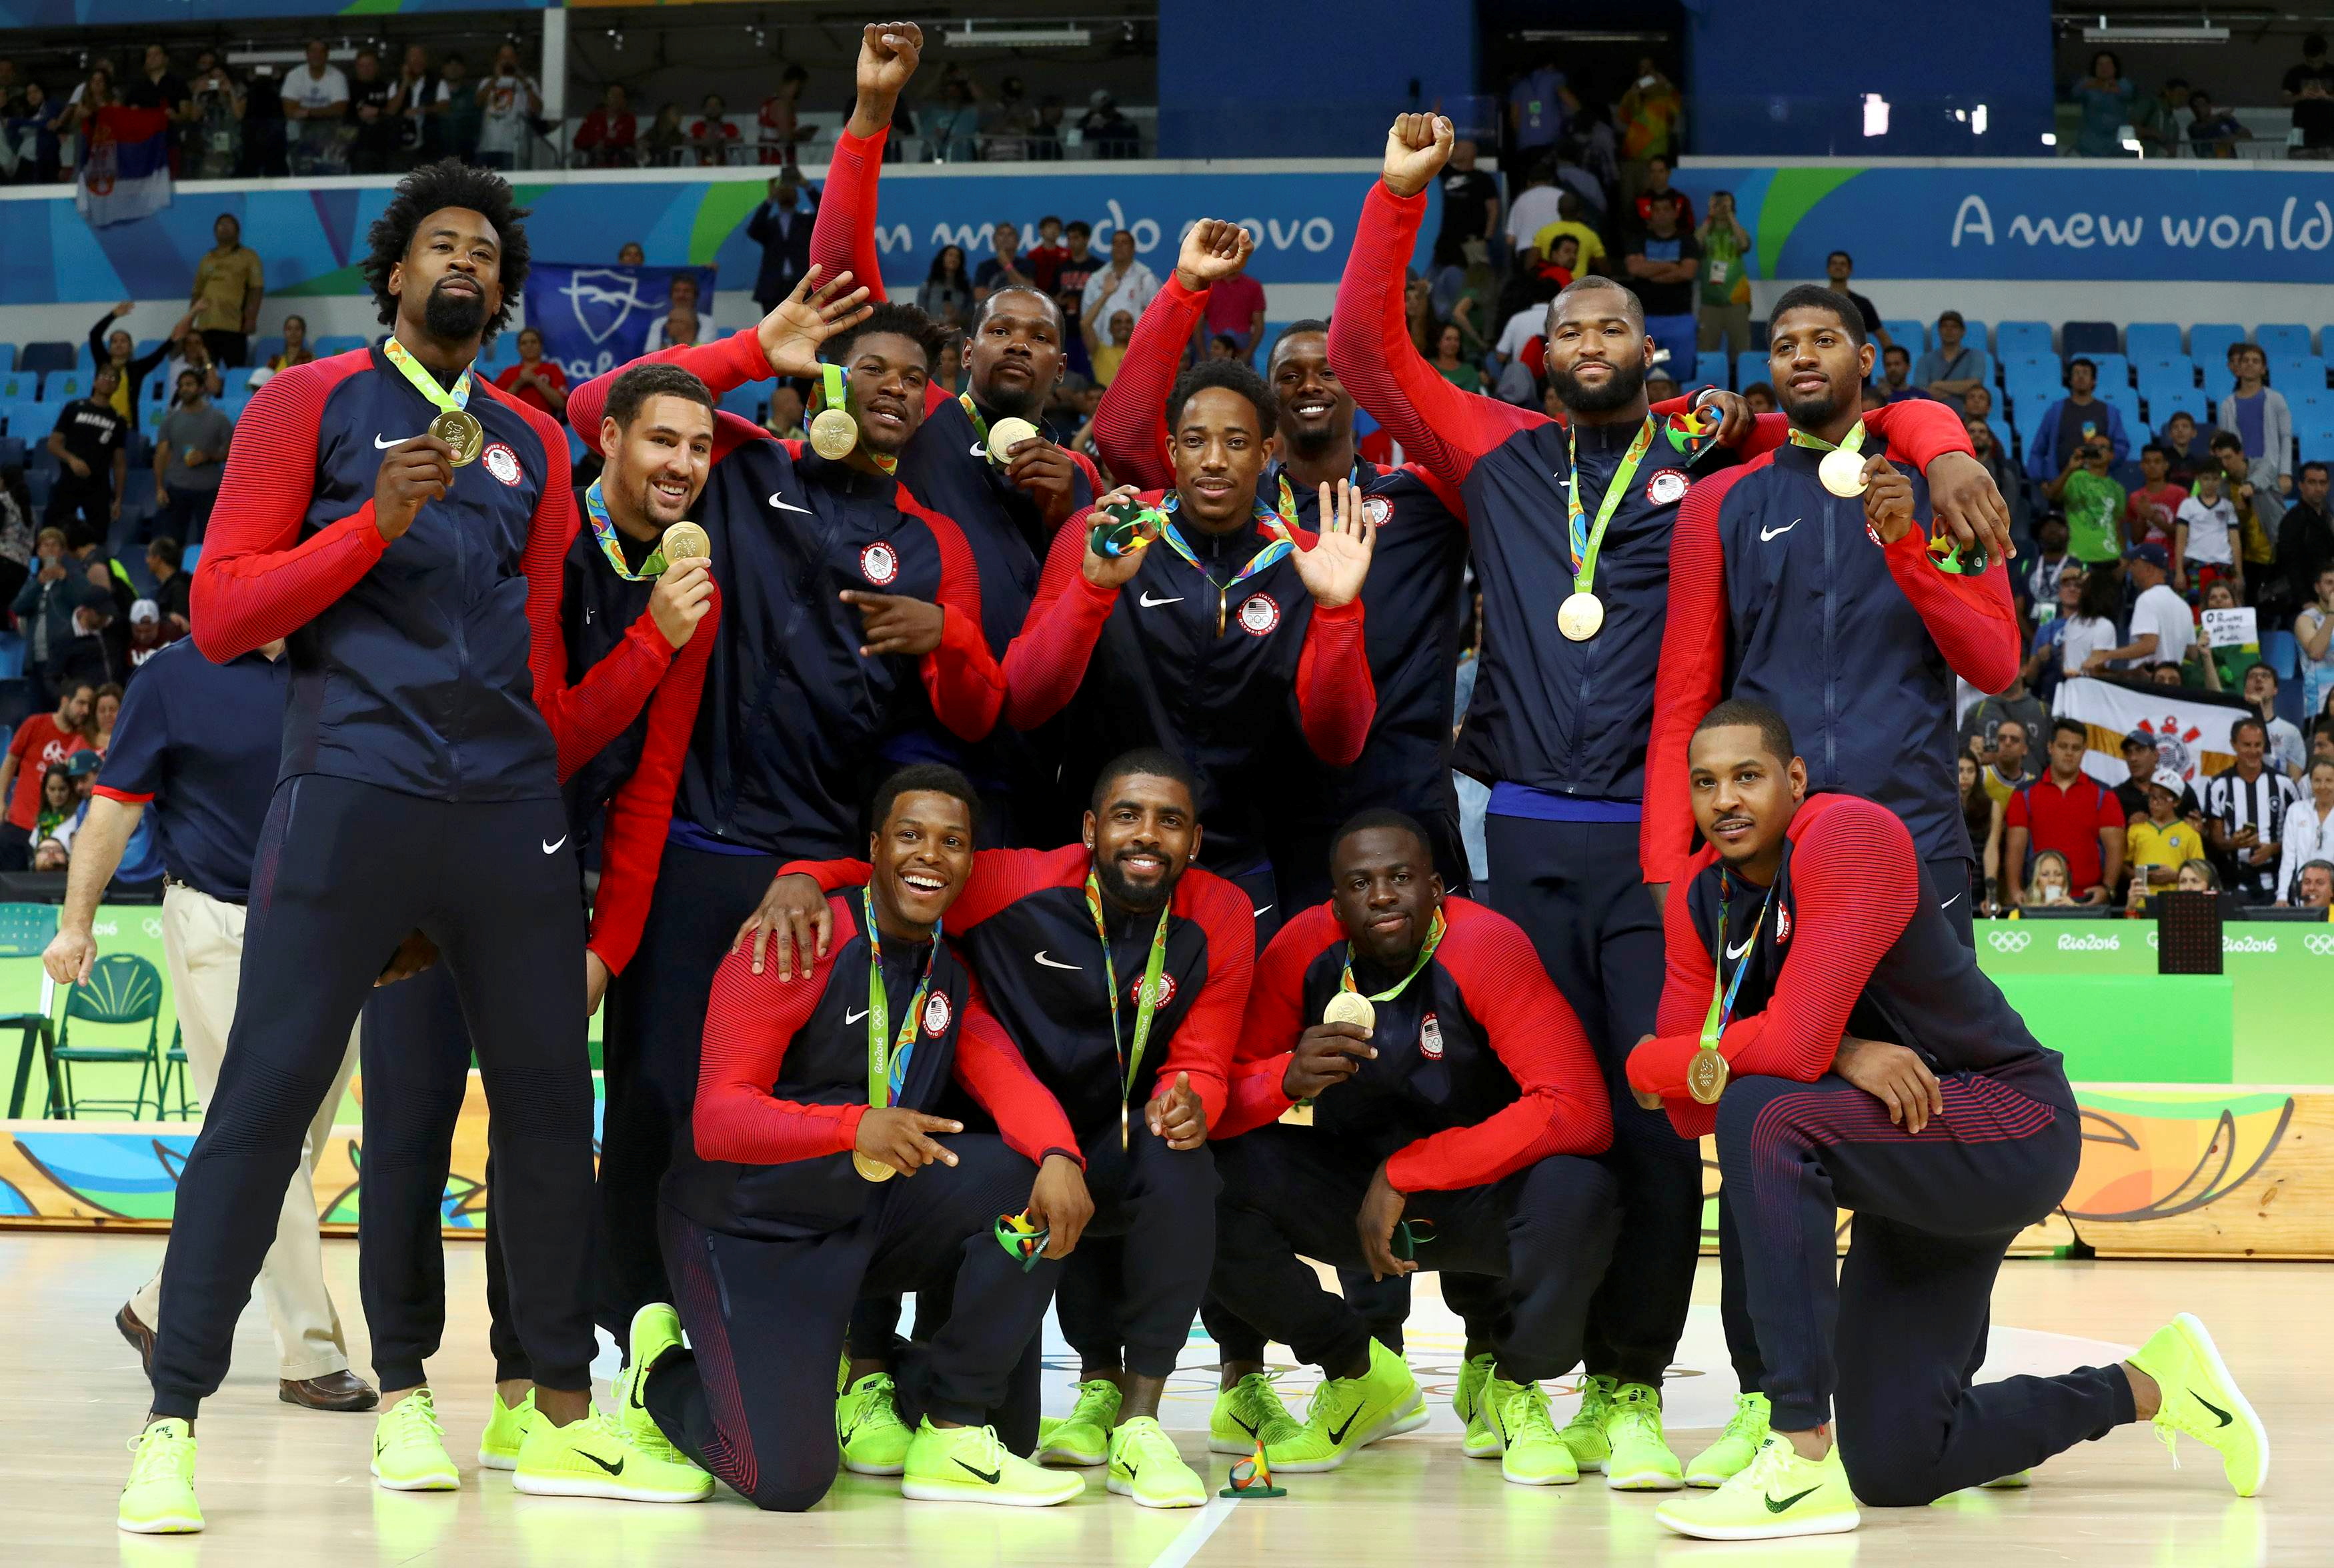 Malawi Dobrodruh Slzy olympic games 2016 usa basketball team Dítě